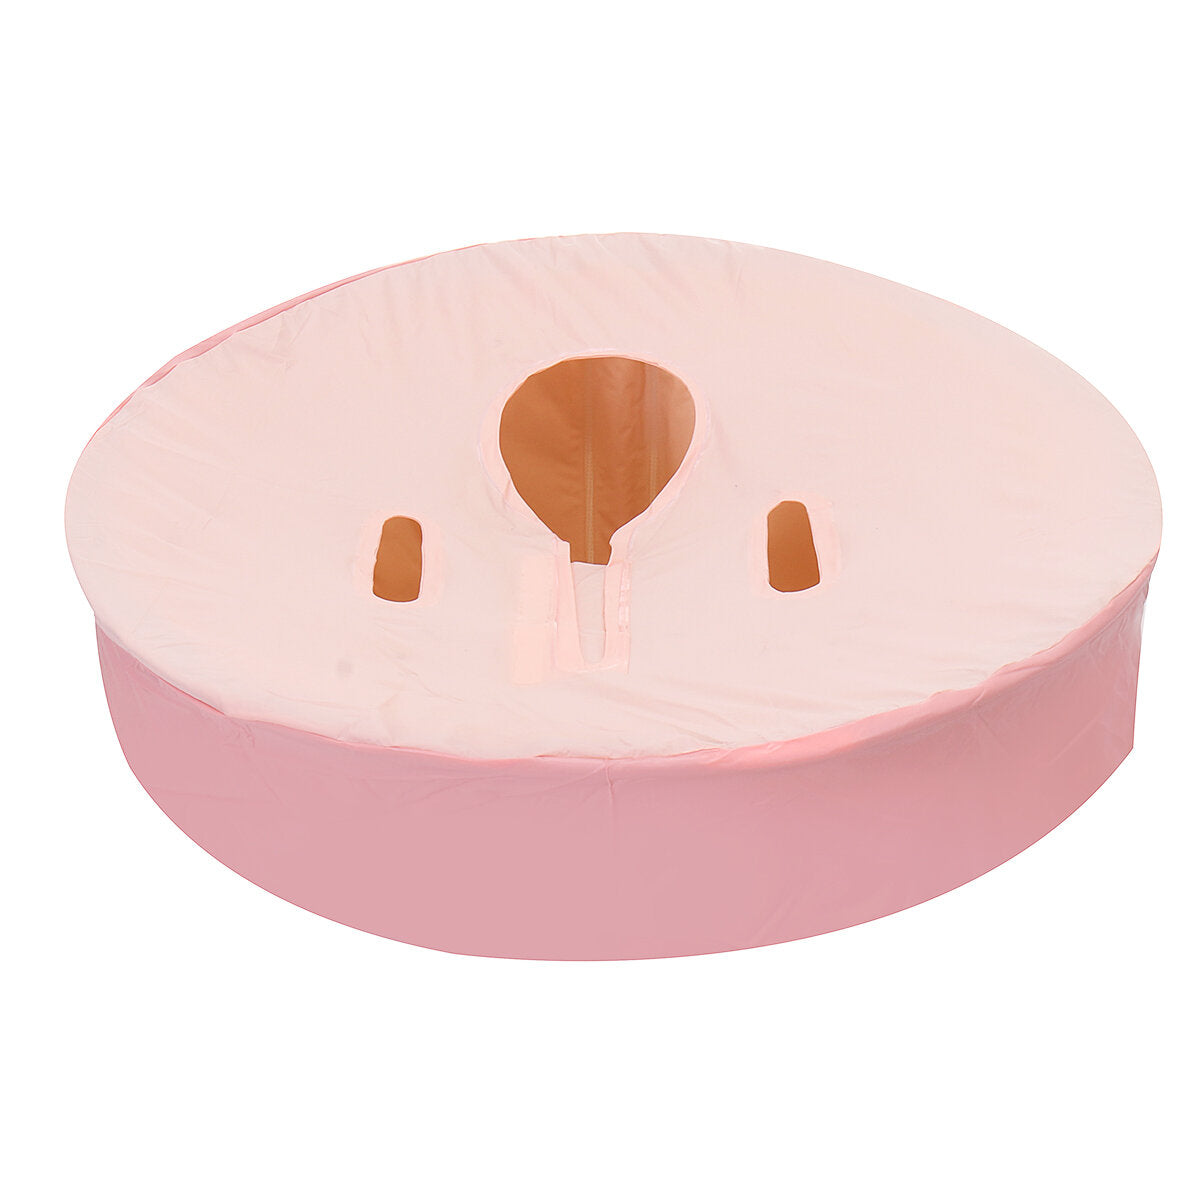 70cm Adult Folding Bath Barrel Insulation Cover for Bathroom Pink